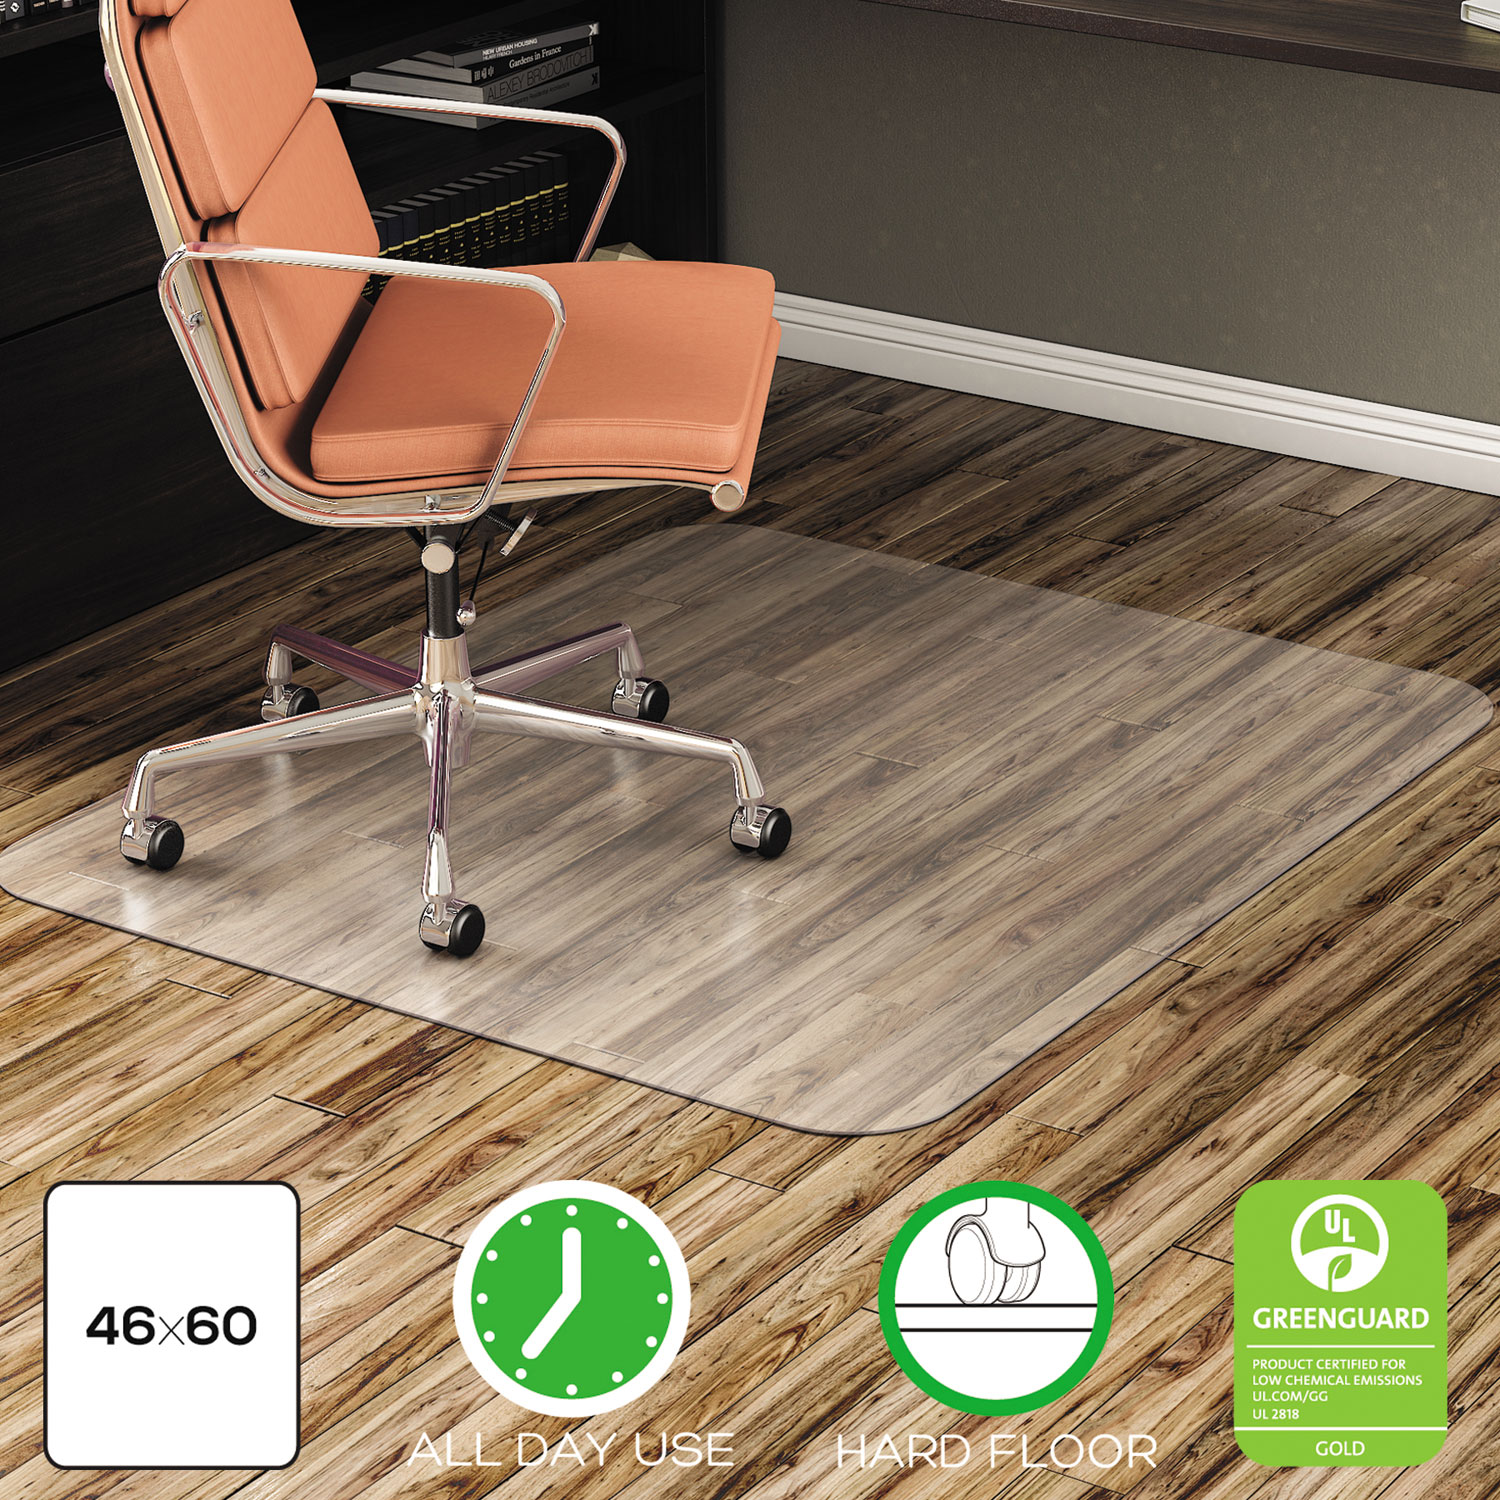  deflecto CM2E442FCOM EconoMat All Day Use Chair Mat for Hard Floors, 46 x 60, Clear, Drop Ship Item (DEFCM2E442FCOM) 